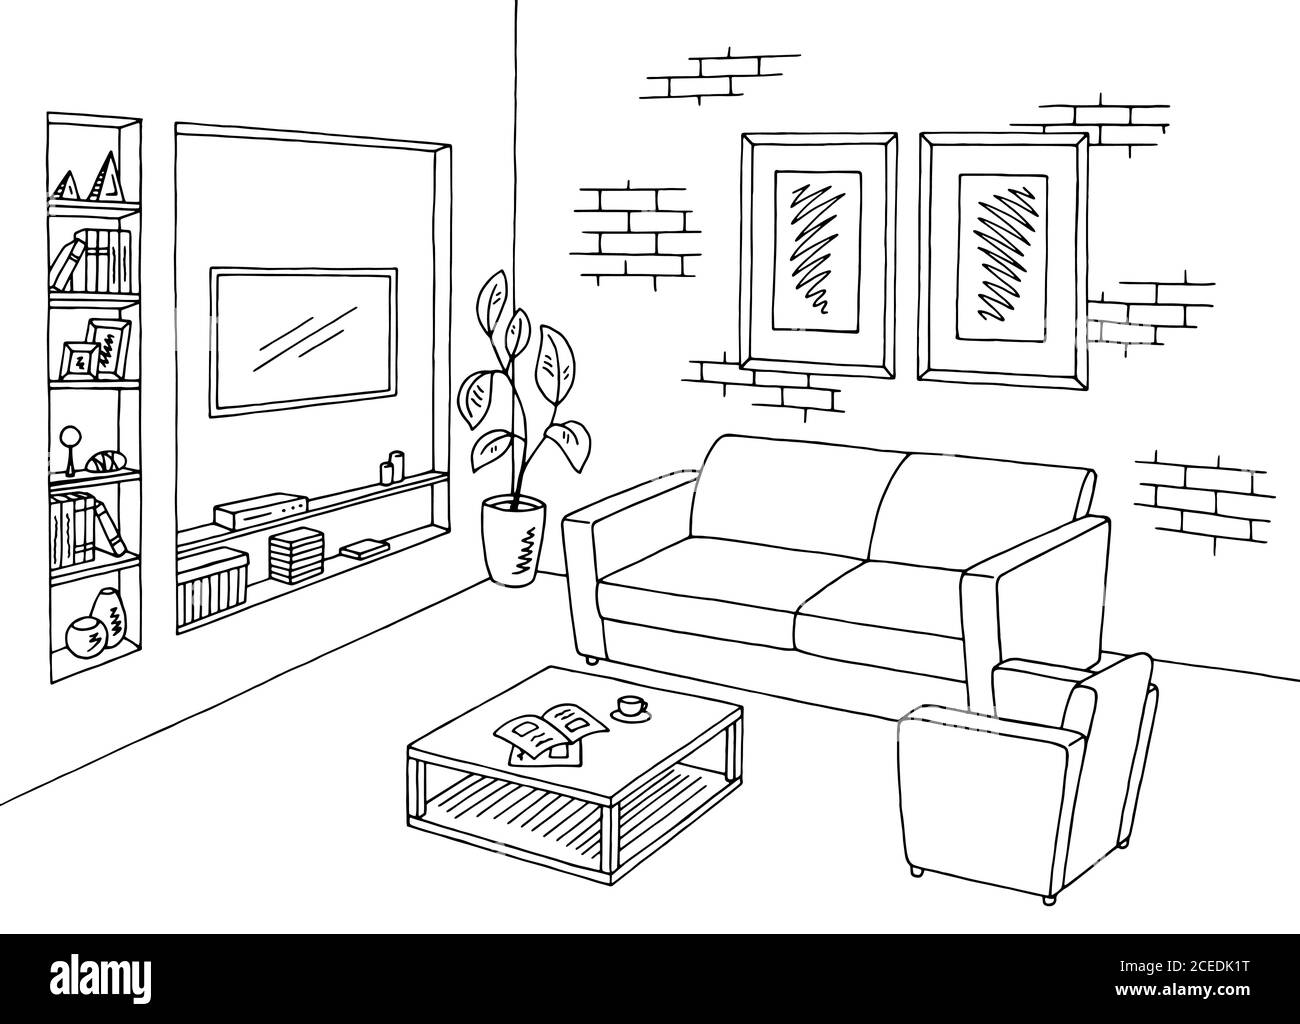 Wohnzimmer Grafik schwarz weiß Interieur Skizze Illustration Vektor  Stock-Vektorgrafik - Alamy